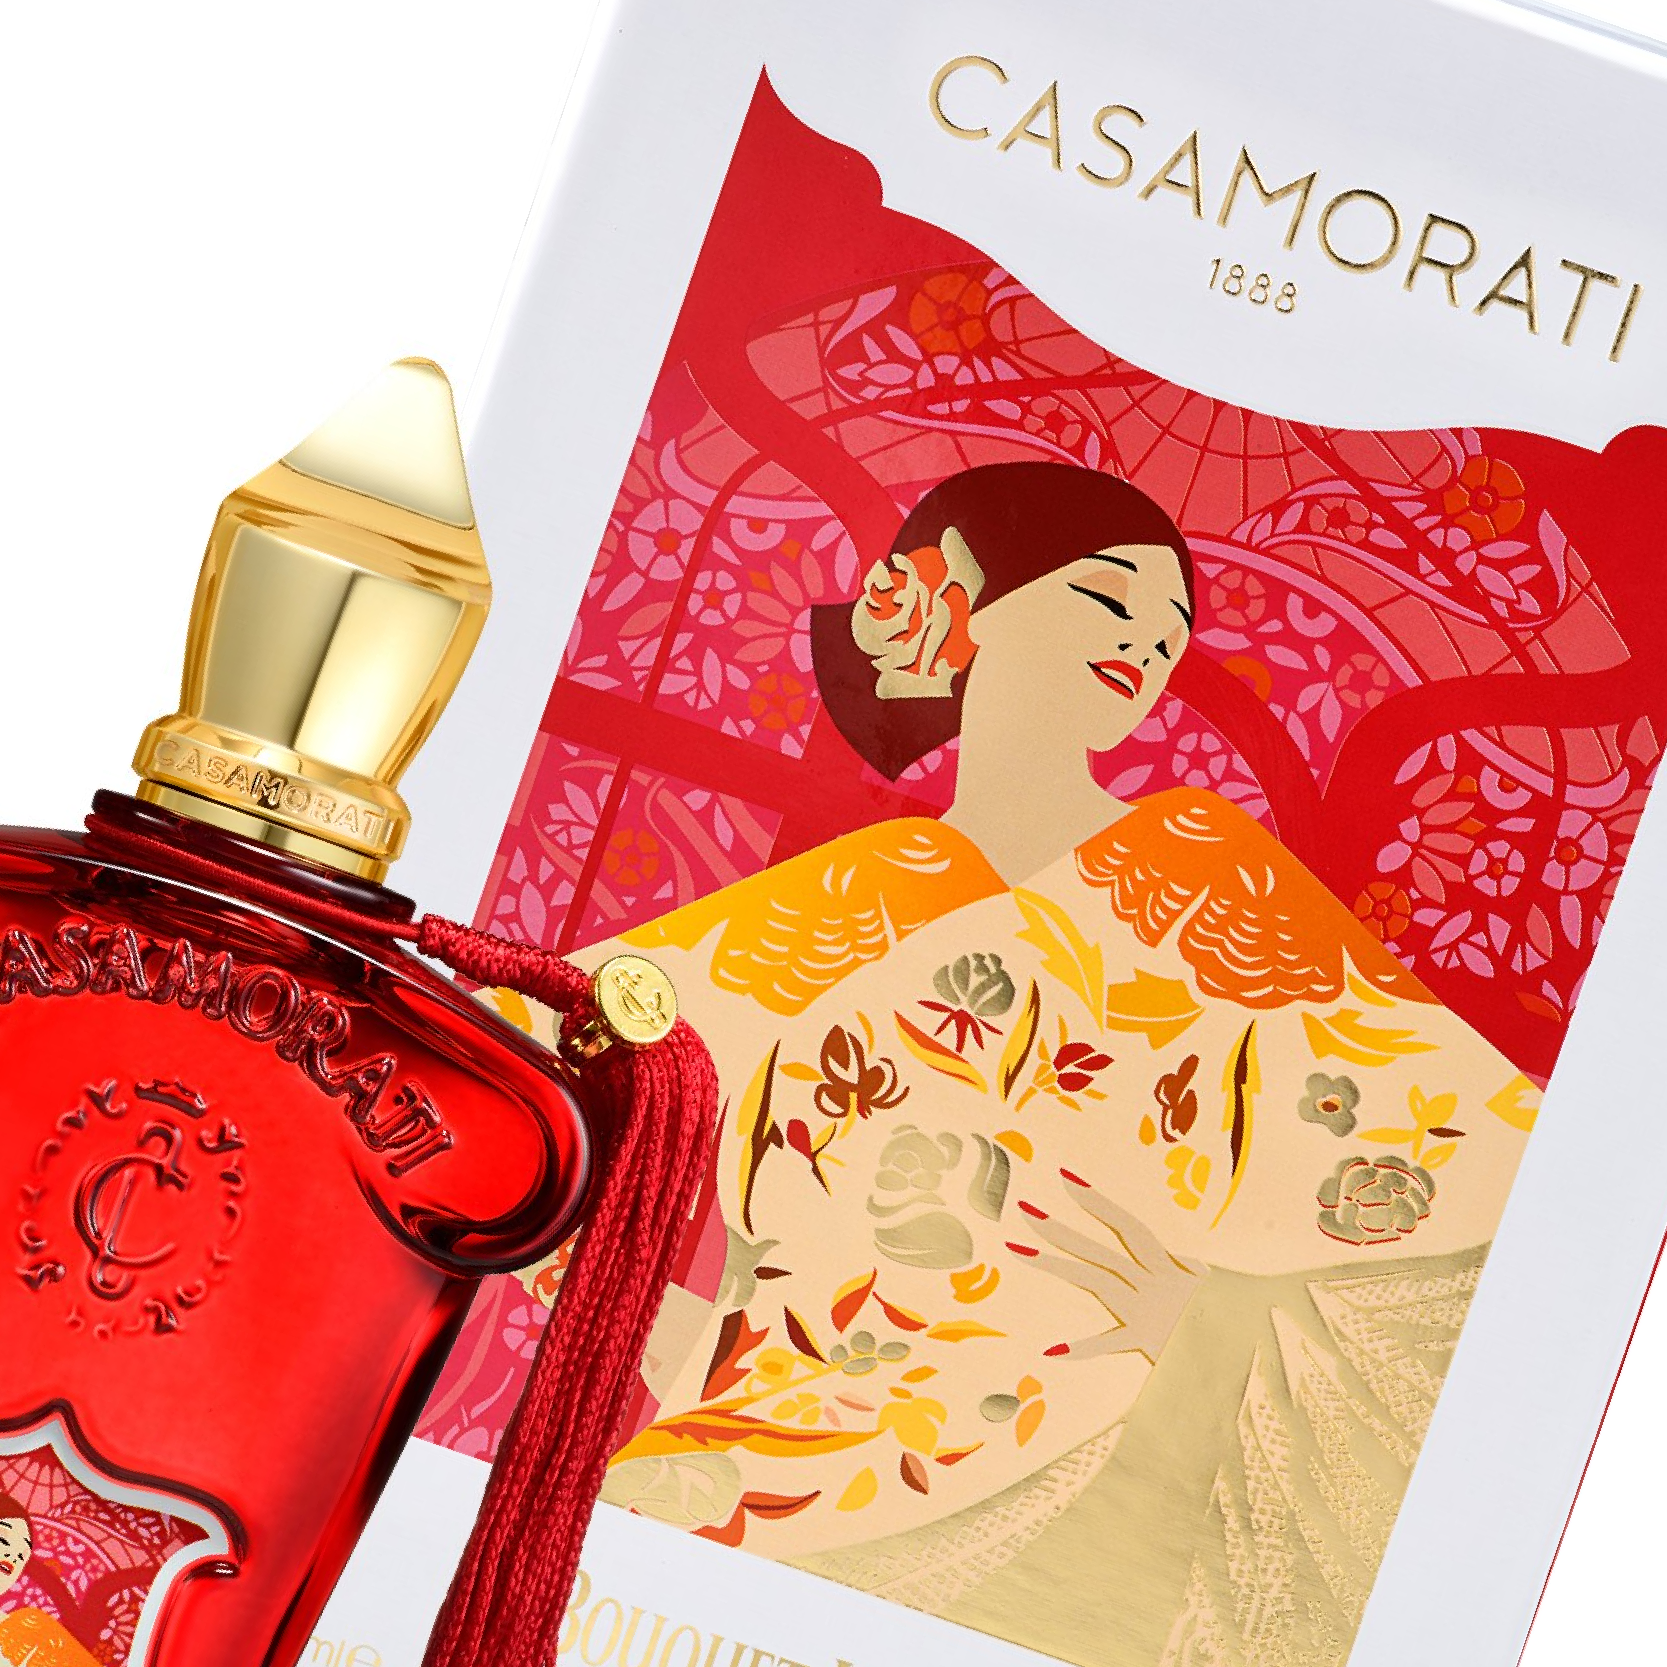 CASAMORATI - AAFKES│distributie van exclusieve parfums